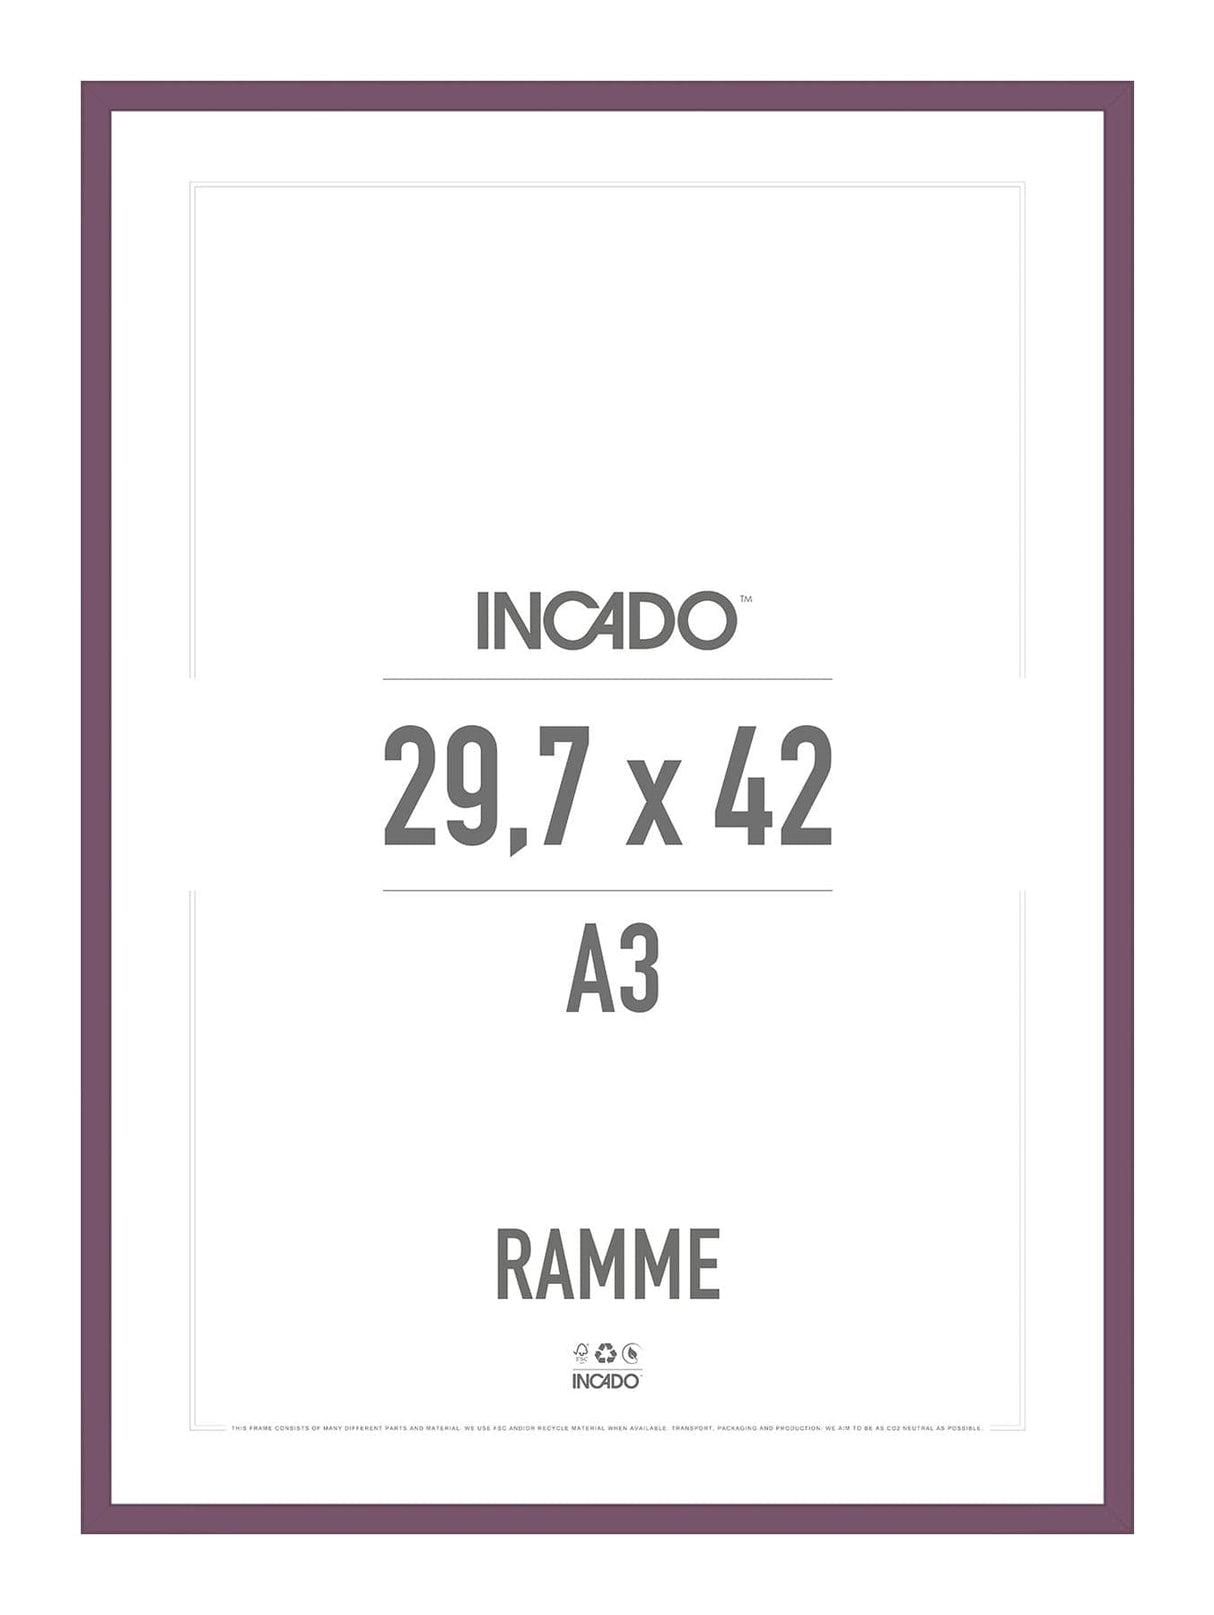 Berry conserve lilla ramme - Incado NordicLine - 29,7 x 42 cm / A3 29,7 x 42  / A3 cm Ramme